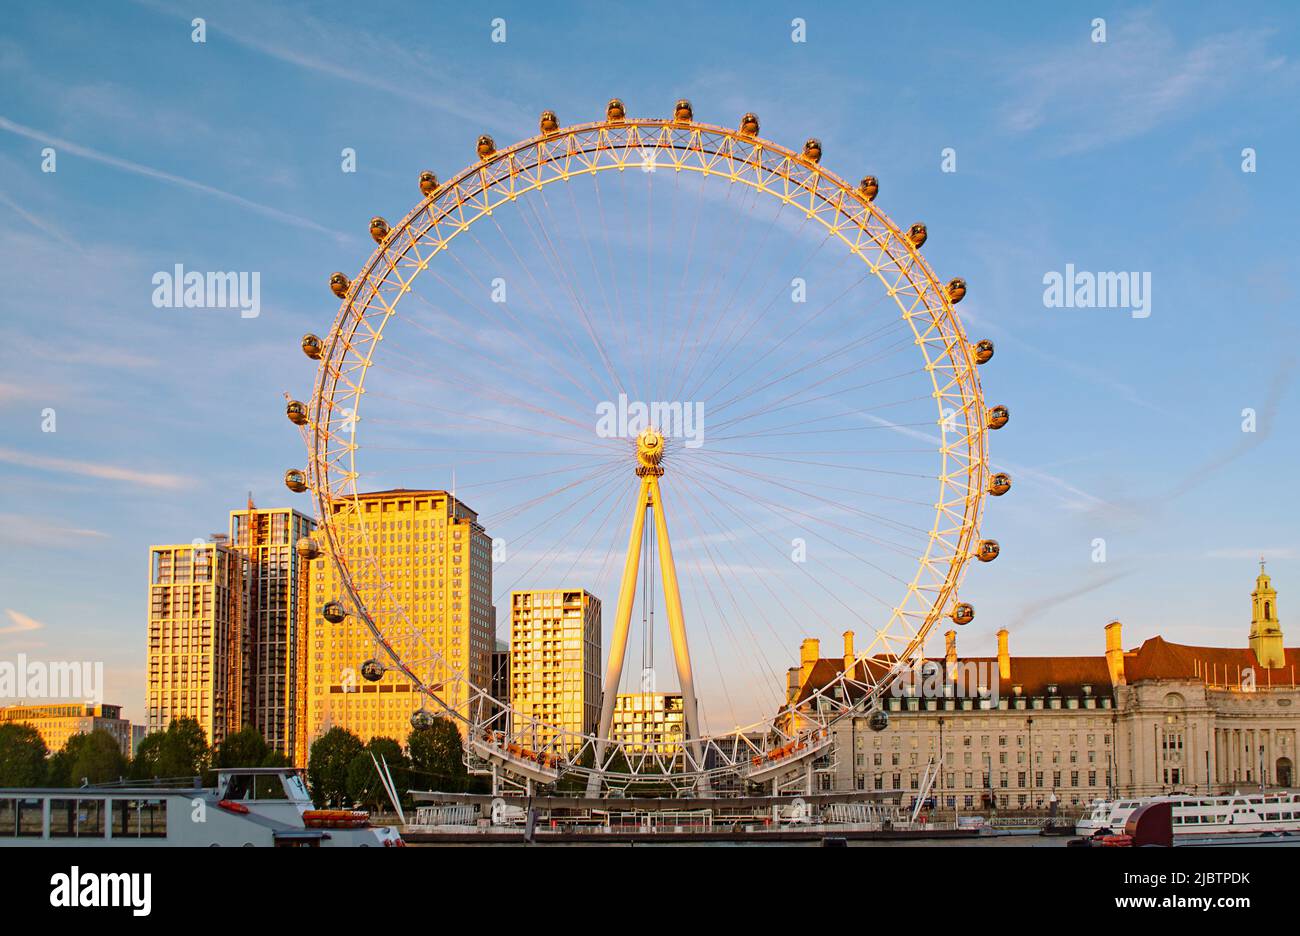 Arquitectura London Wheel Foto de stock